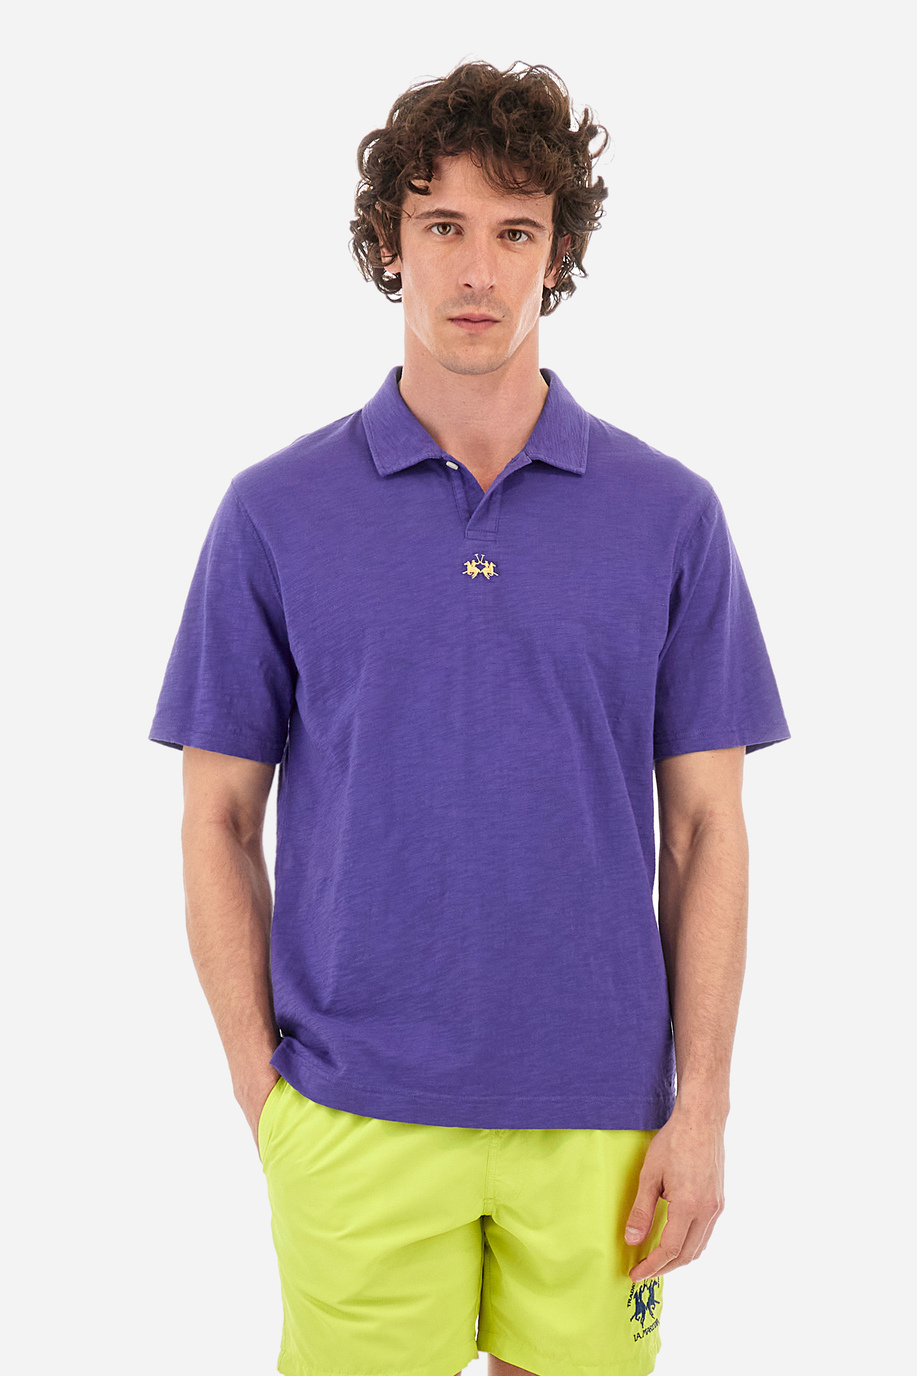 Men's polo shirt in a regular fit - Polo 19-42 - Regular fit | La Martina - Official Online Shop